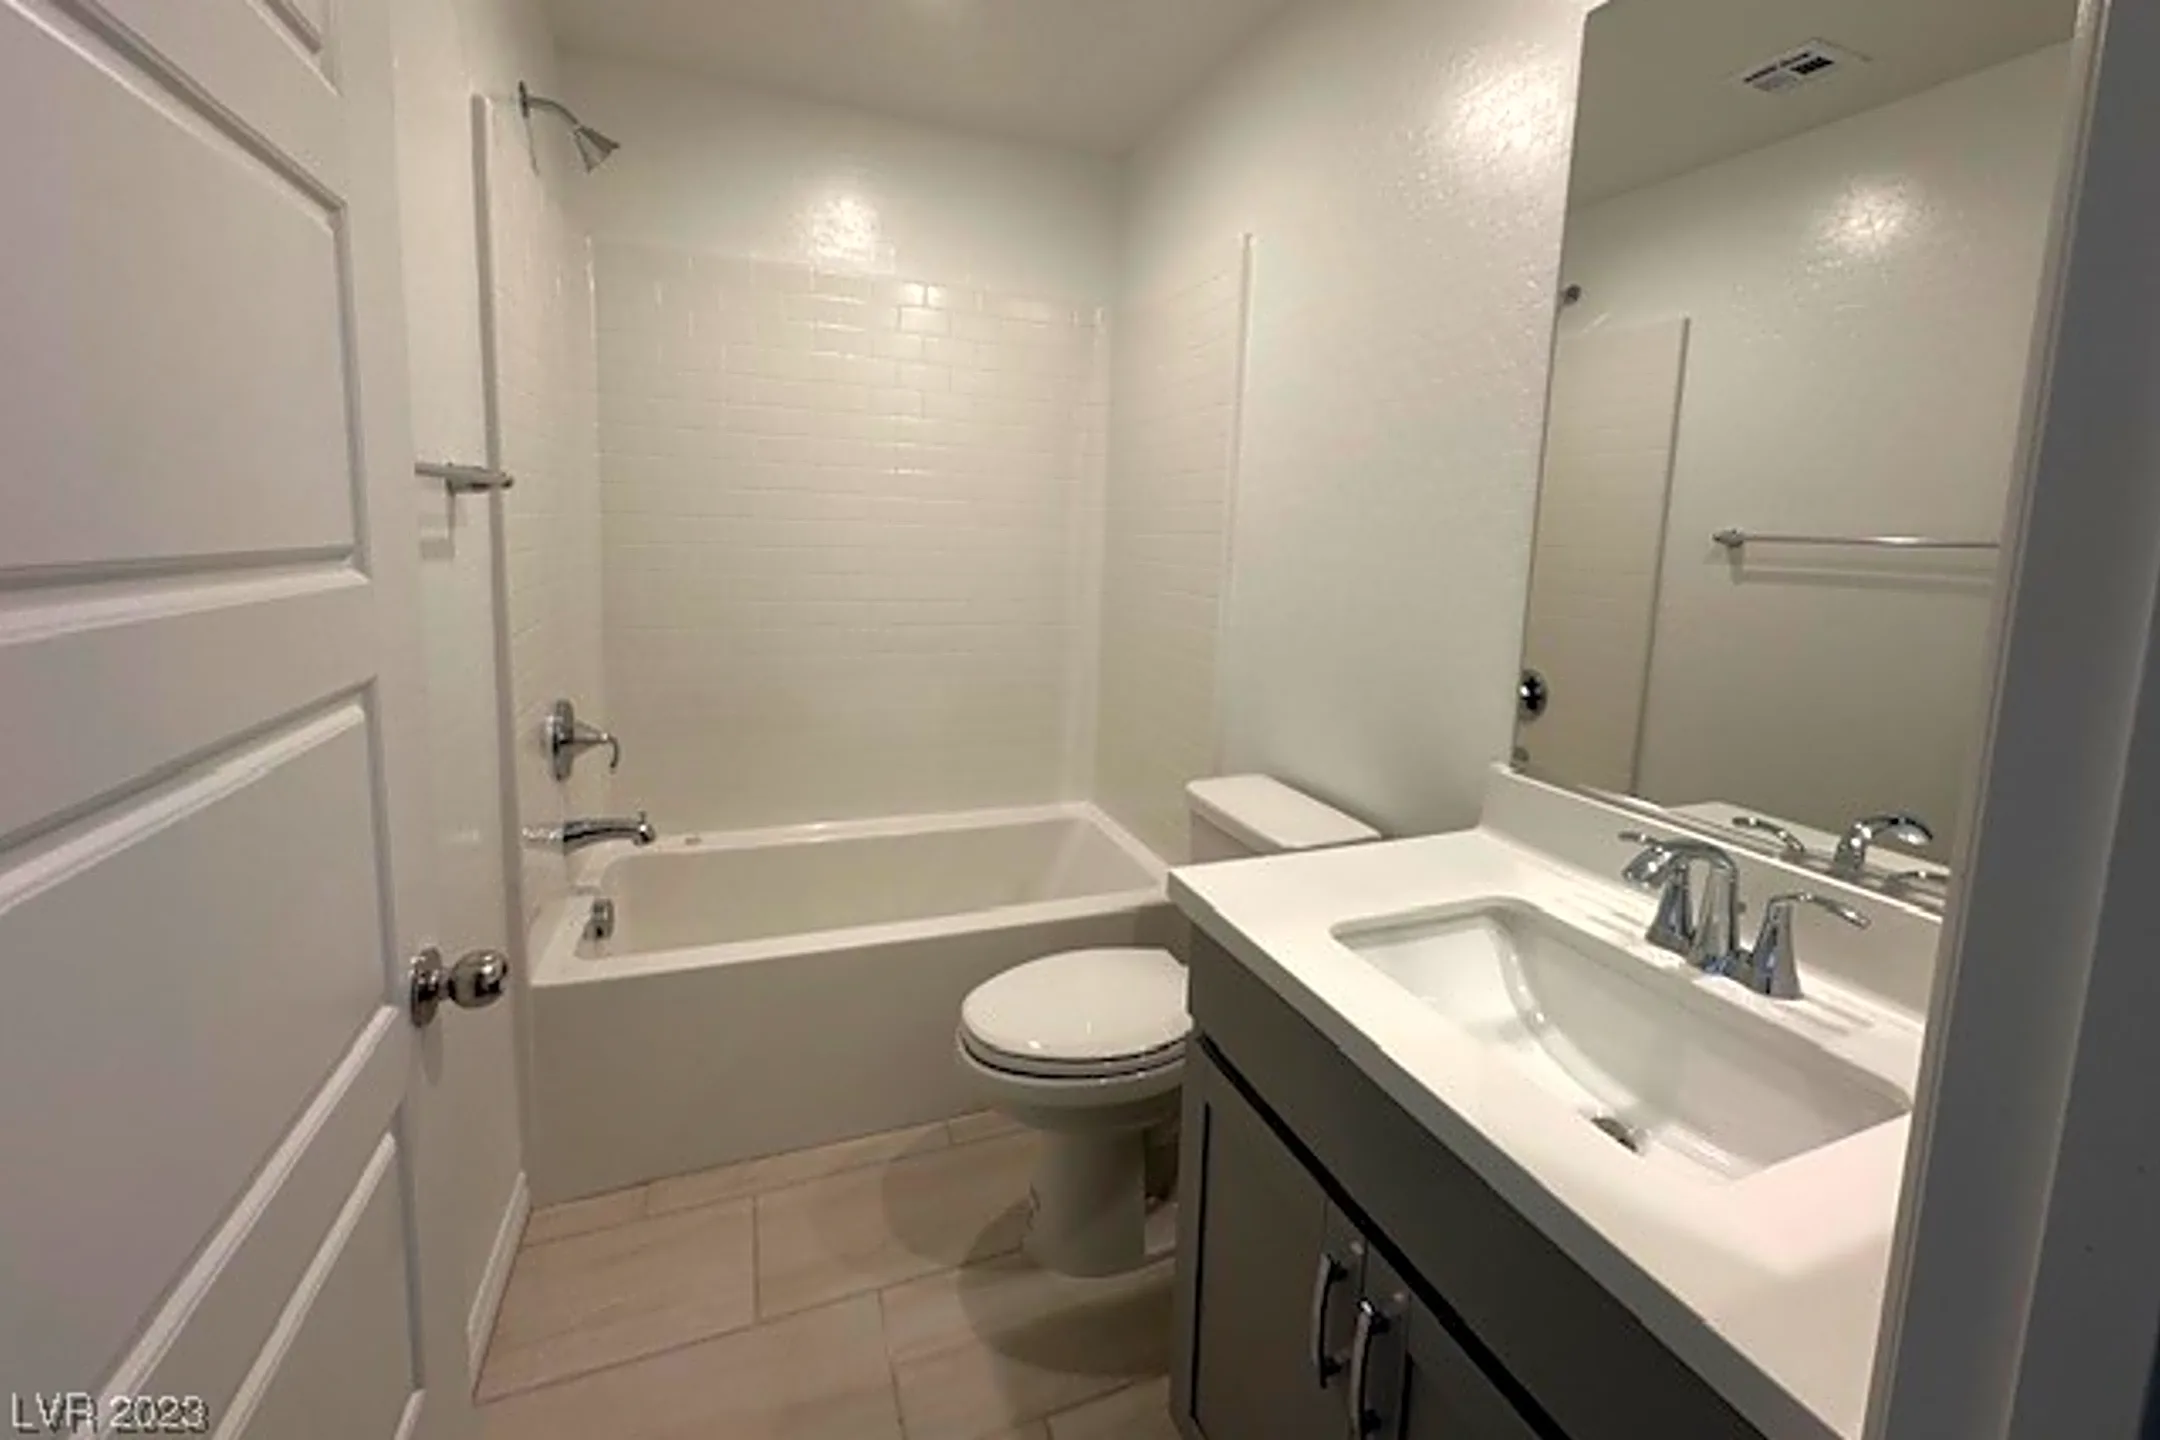 Bathroom - 10723 Lilestone Ct - Las Vegas, NV